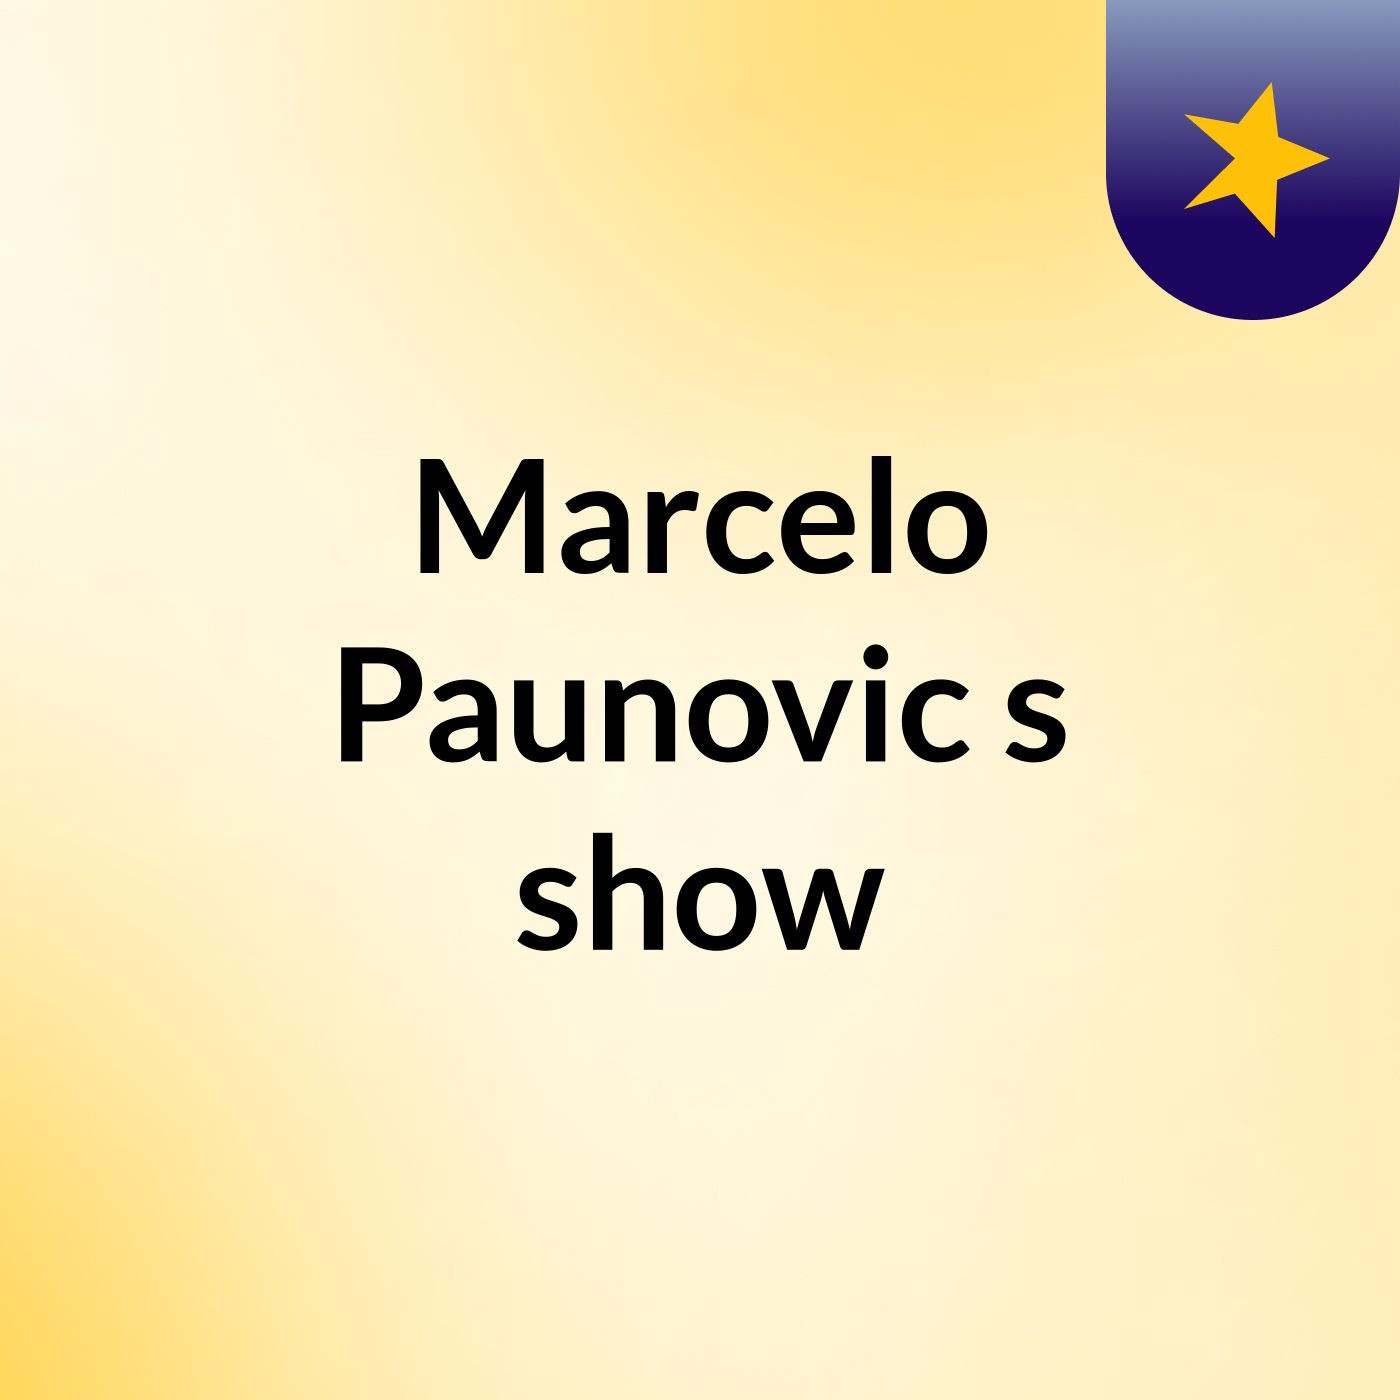 Marcelo Paunovic's show